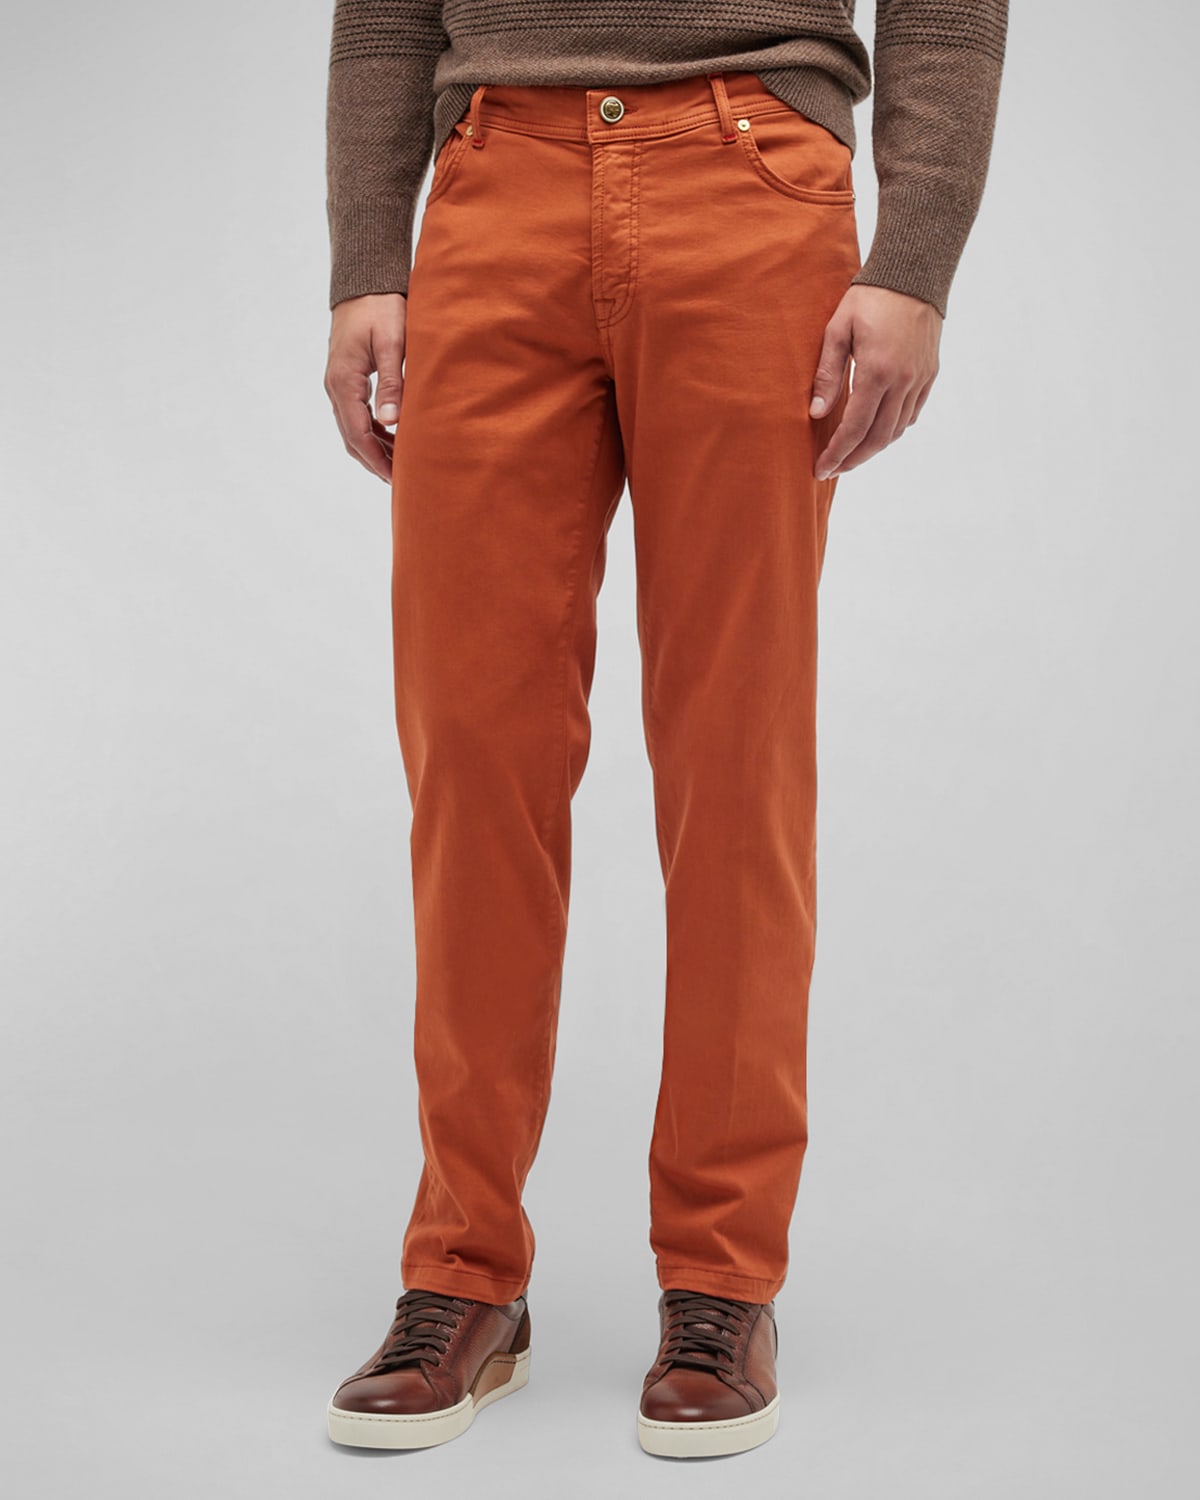 Five Sp 45 Sp Pocket Mens Pants | Neiman Marcus